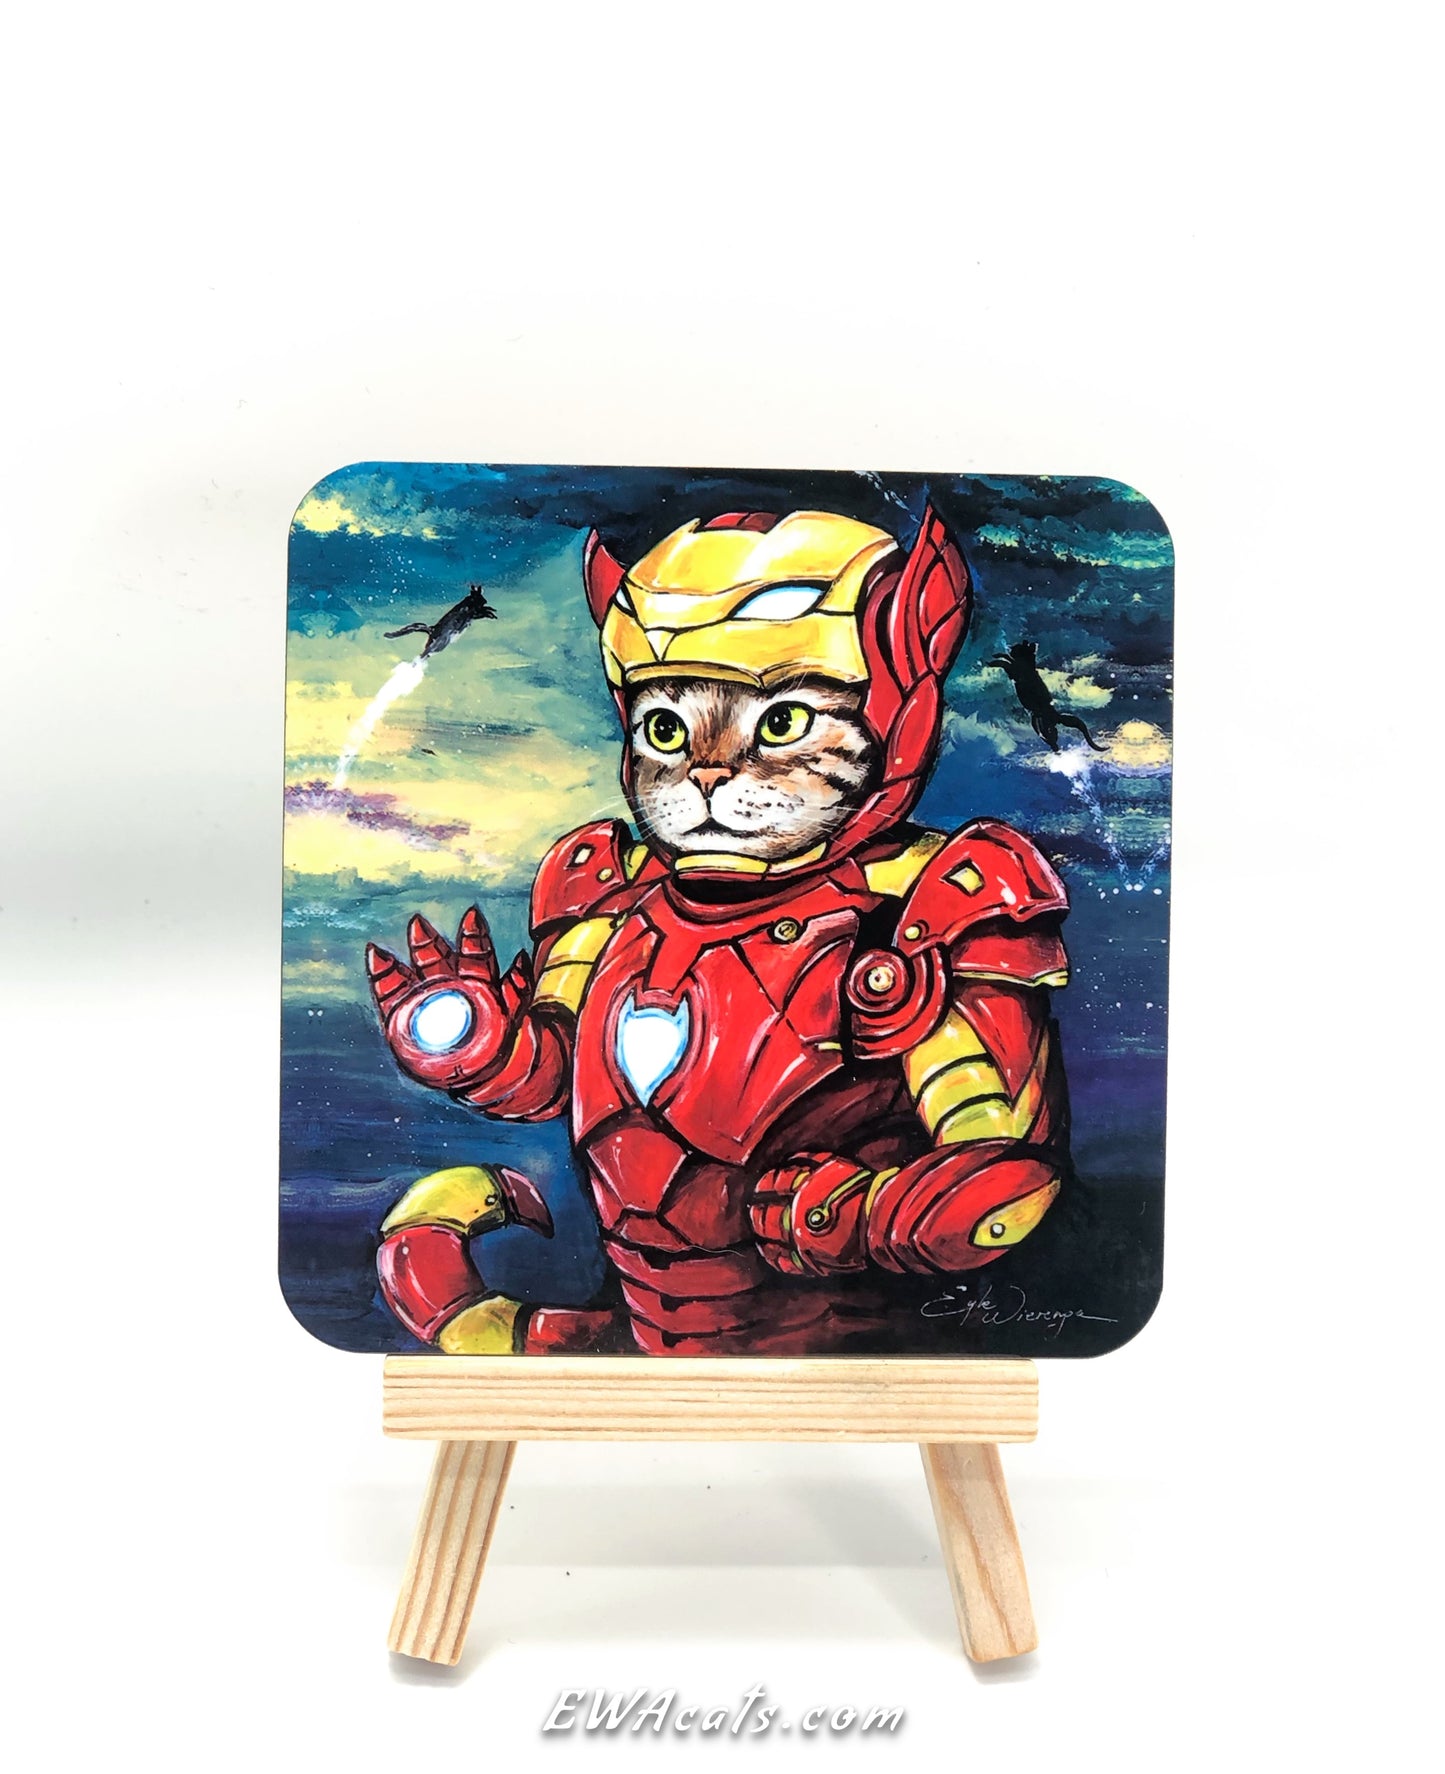 Coaster "Iron Kitty"